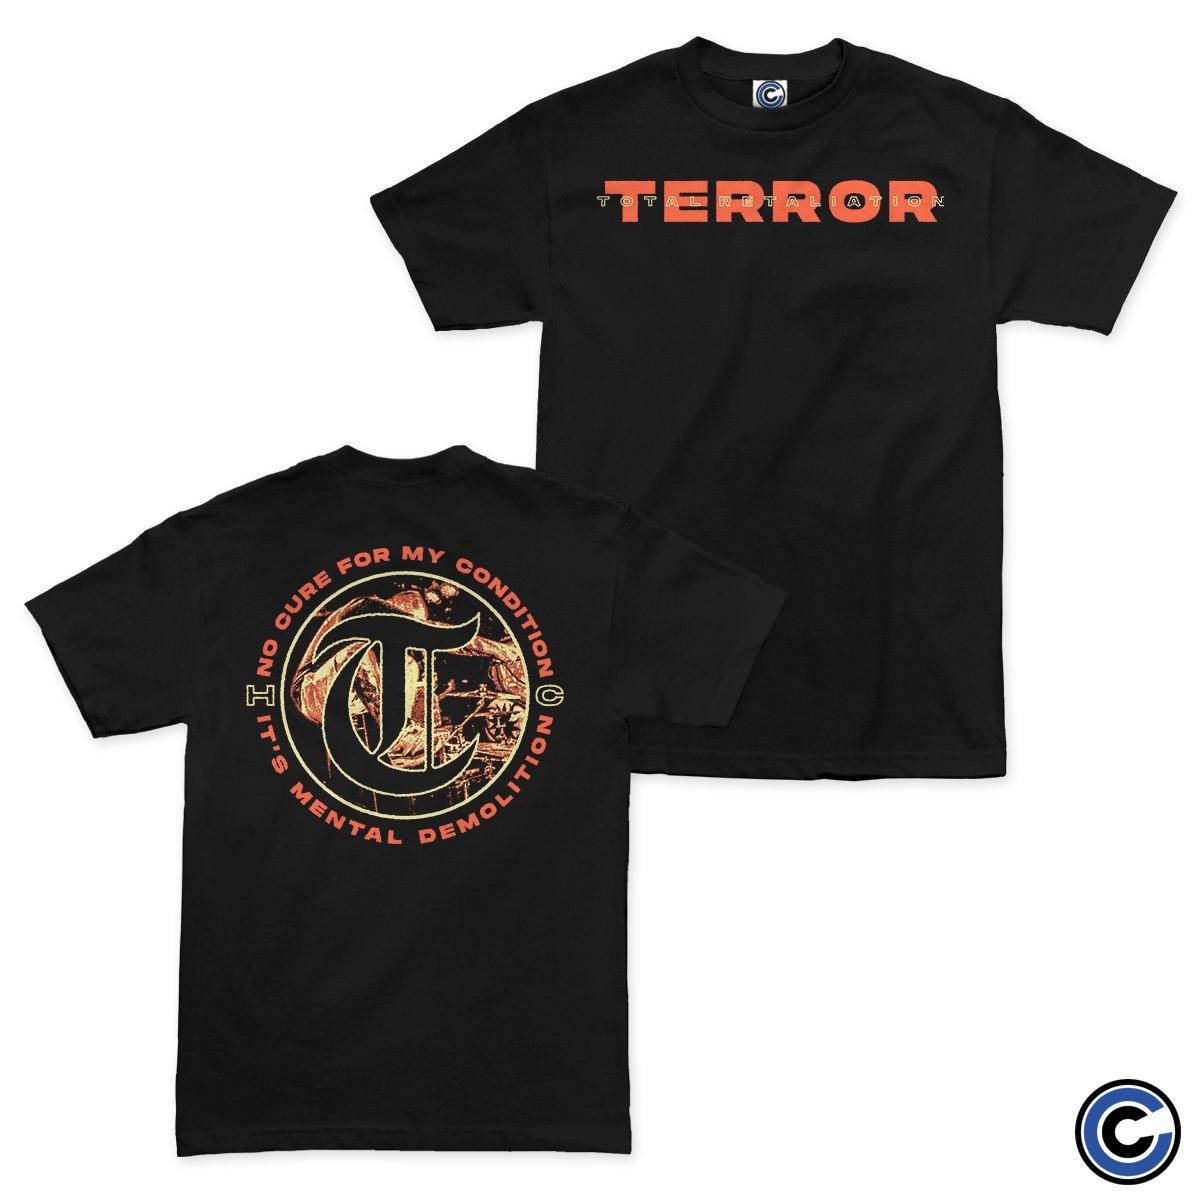 Buy – Terror "Demolition" Shirt – Band & Music Merch – Cold Cuts Merch